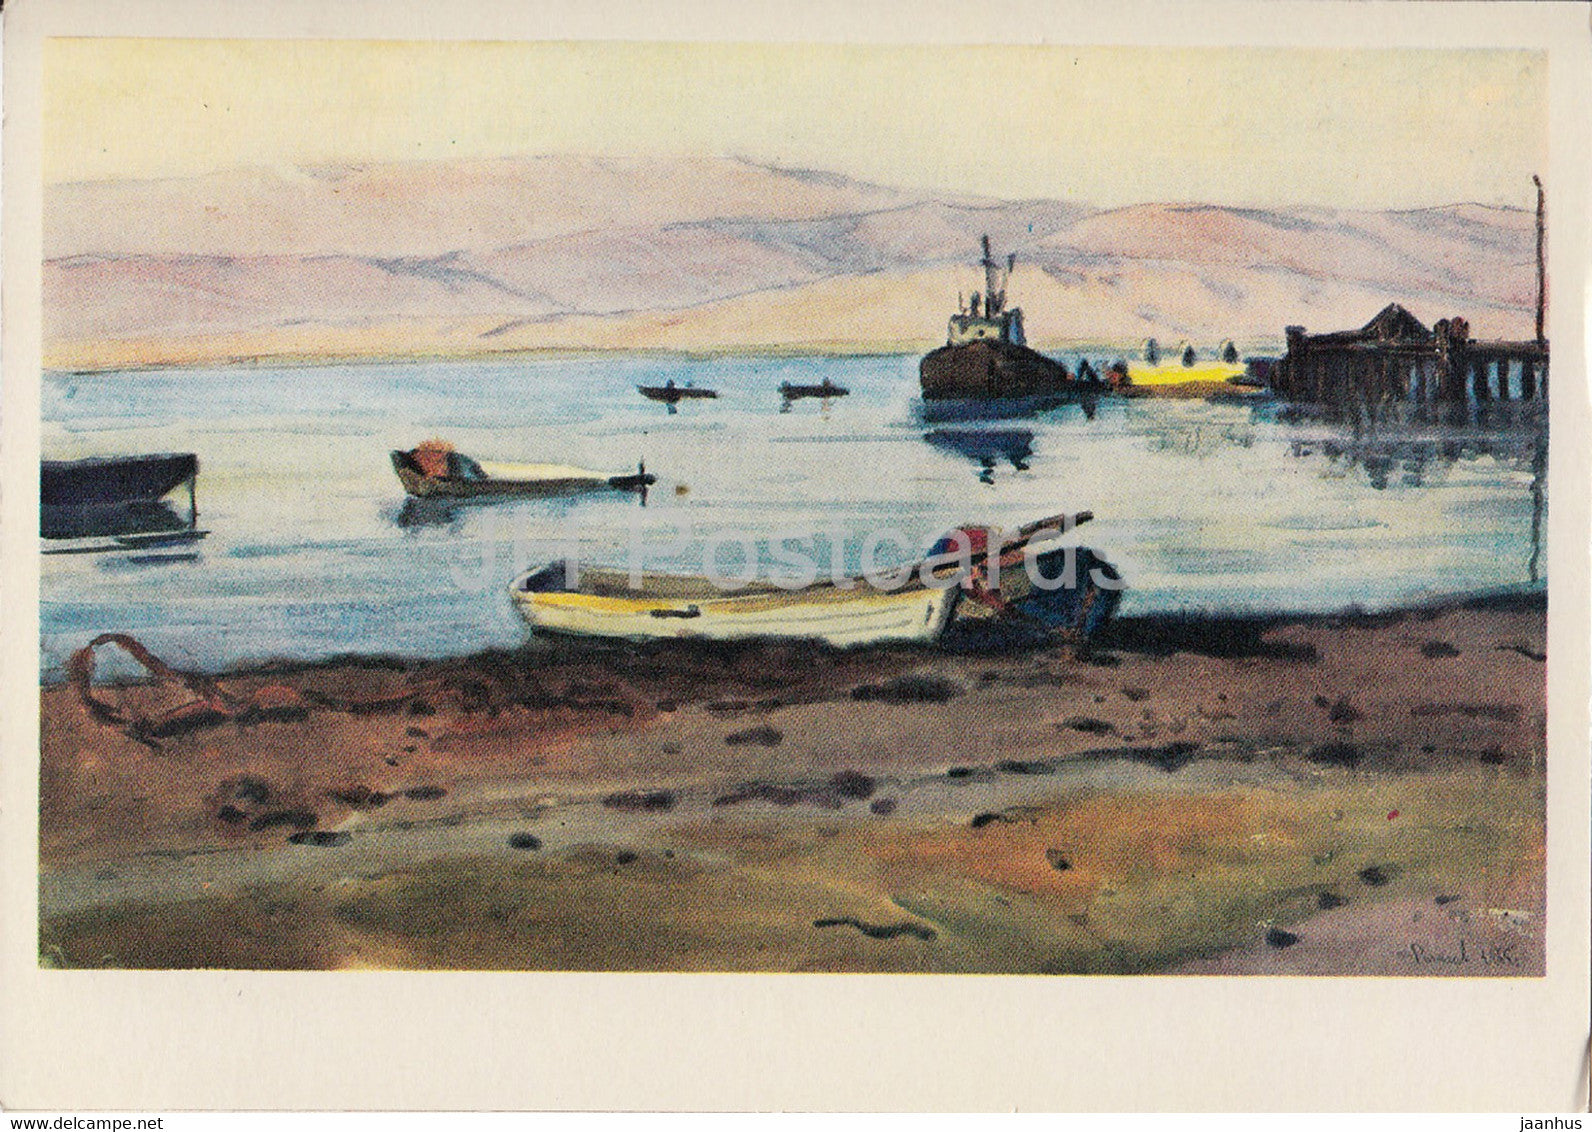 across Kyrgyzstan by V. Rogachev - Issyk Kul - ship - illustration - 1979 - Russia USSR - unused - JH Postcards